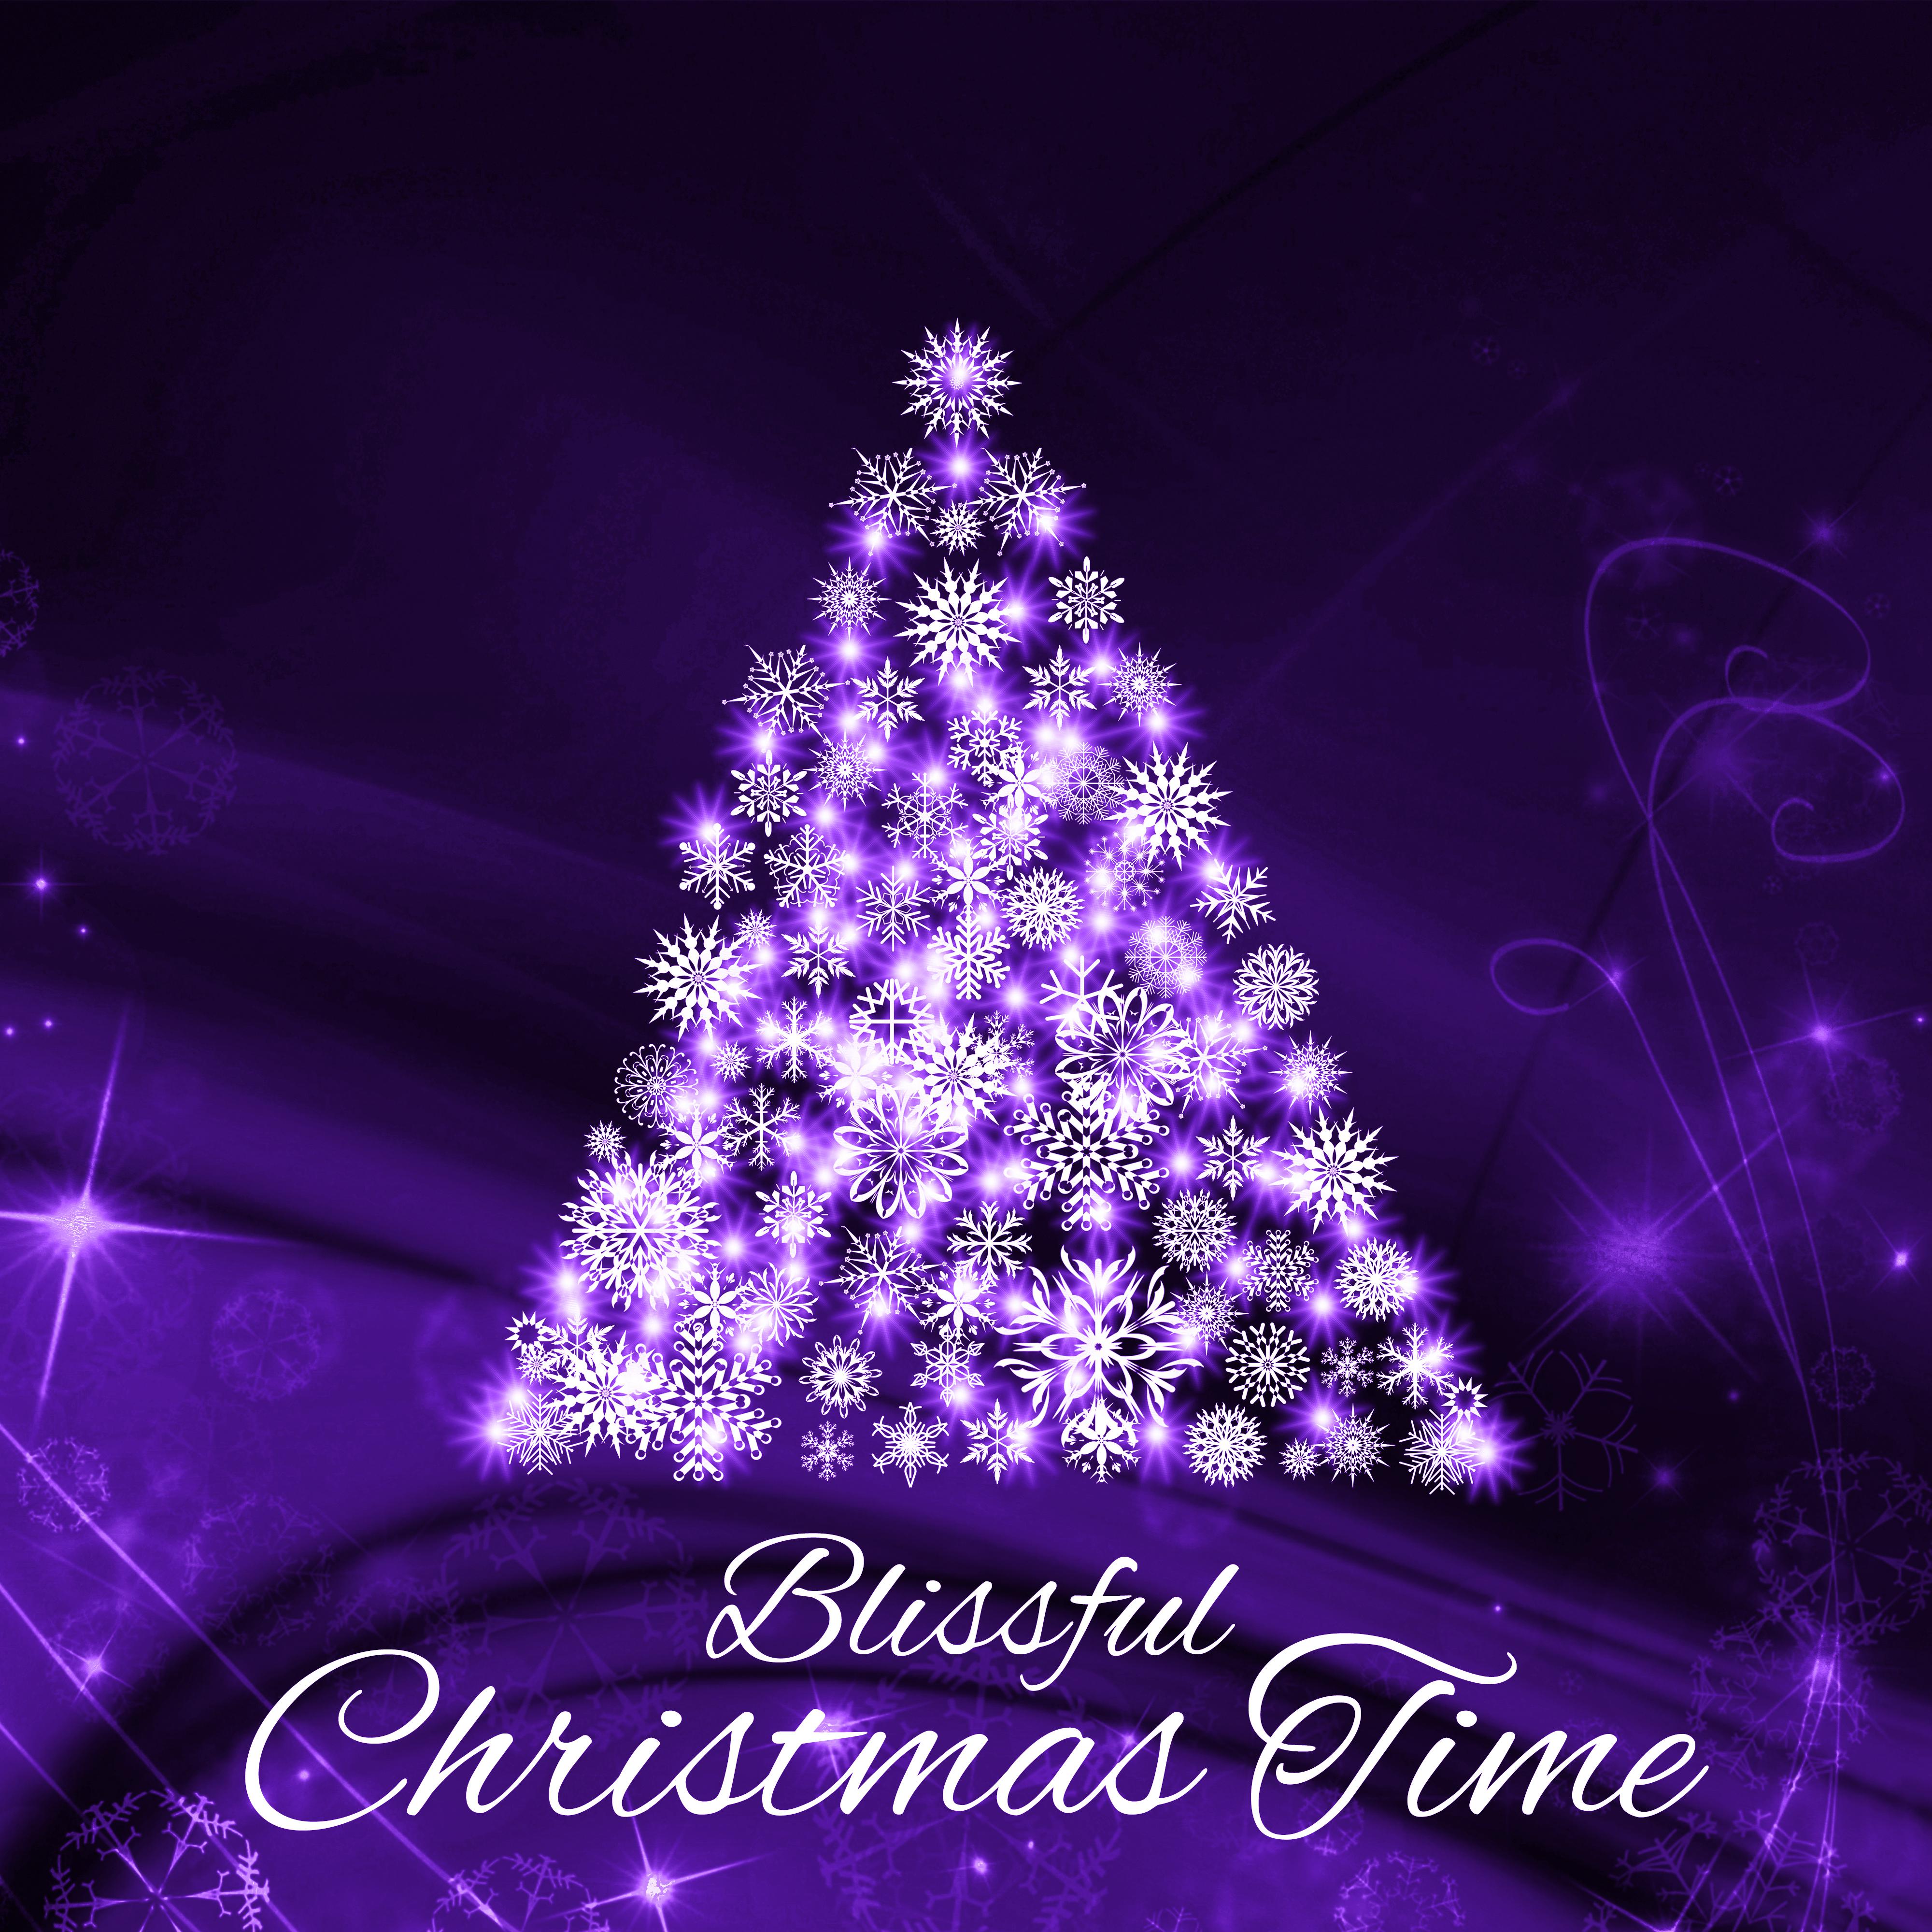 Blissful Christmas Time - Christmas Carols Collection for Winter Holidays